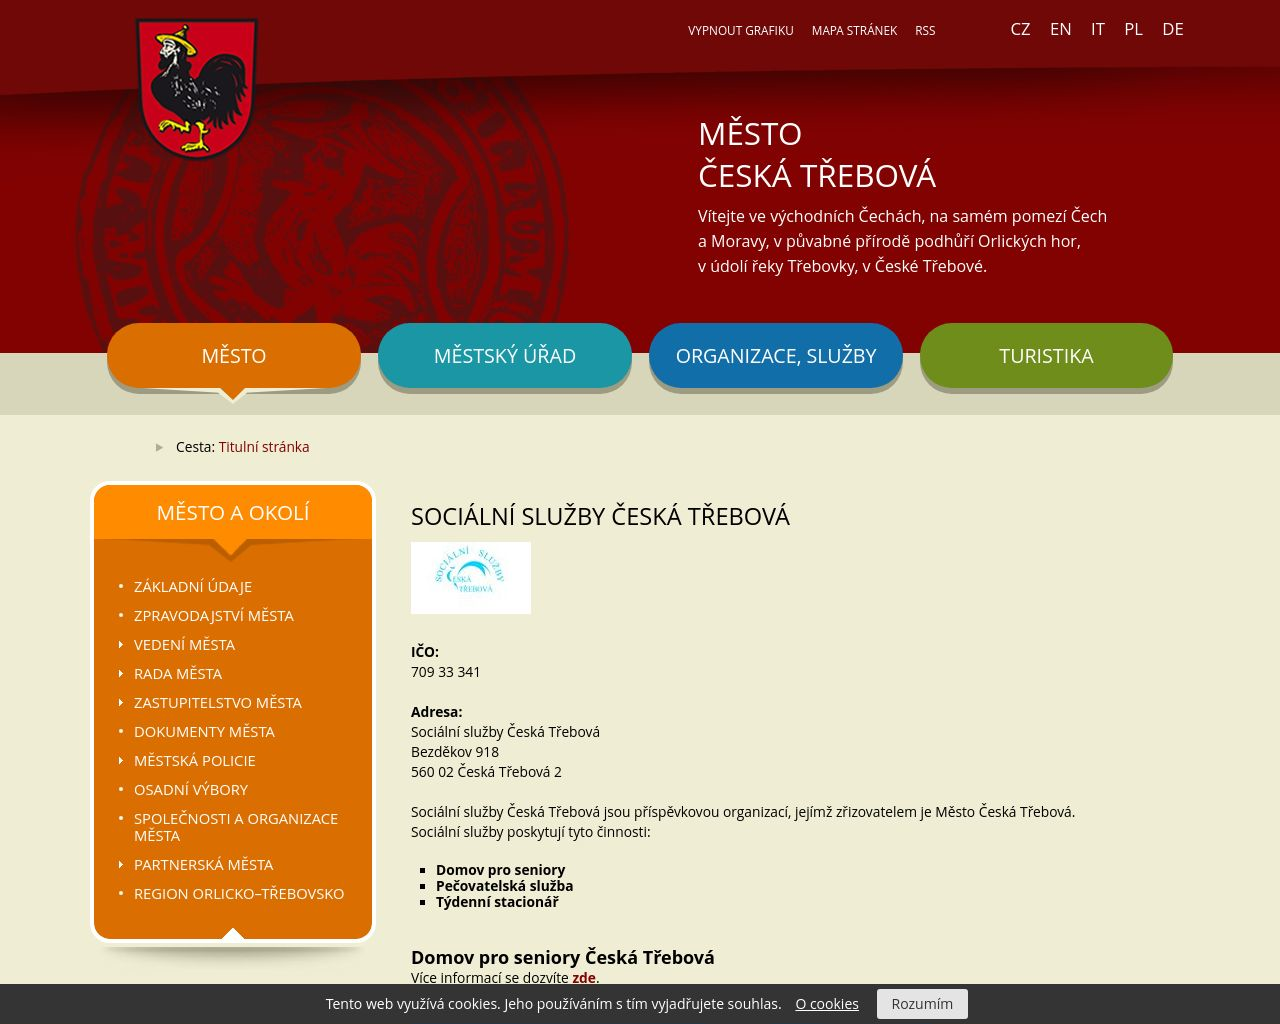 Site Image ddct.cz v 1280x1024